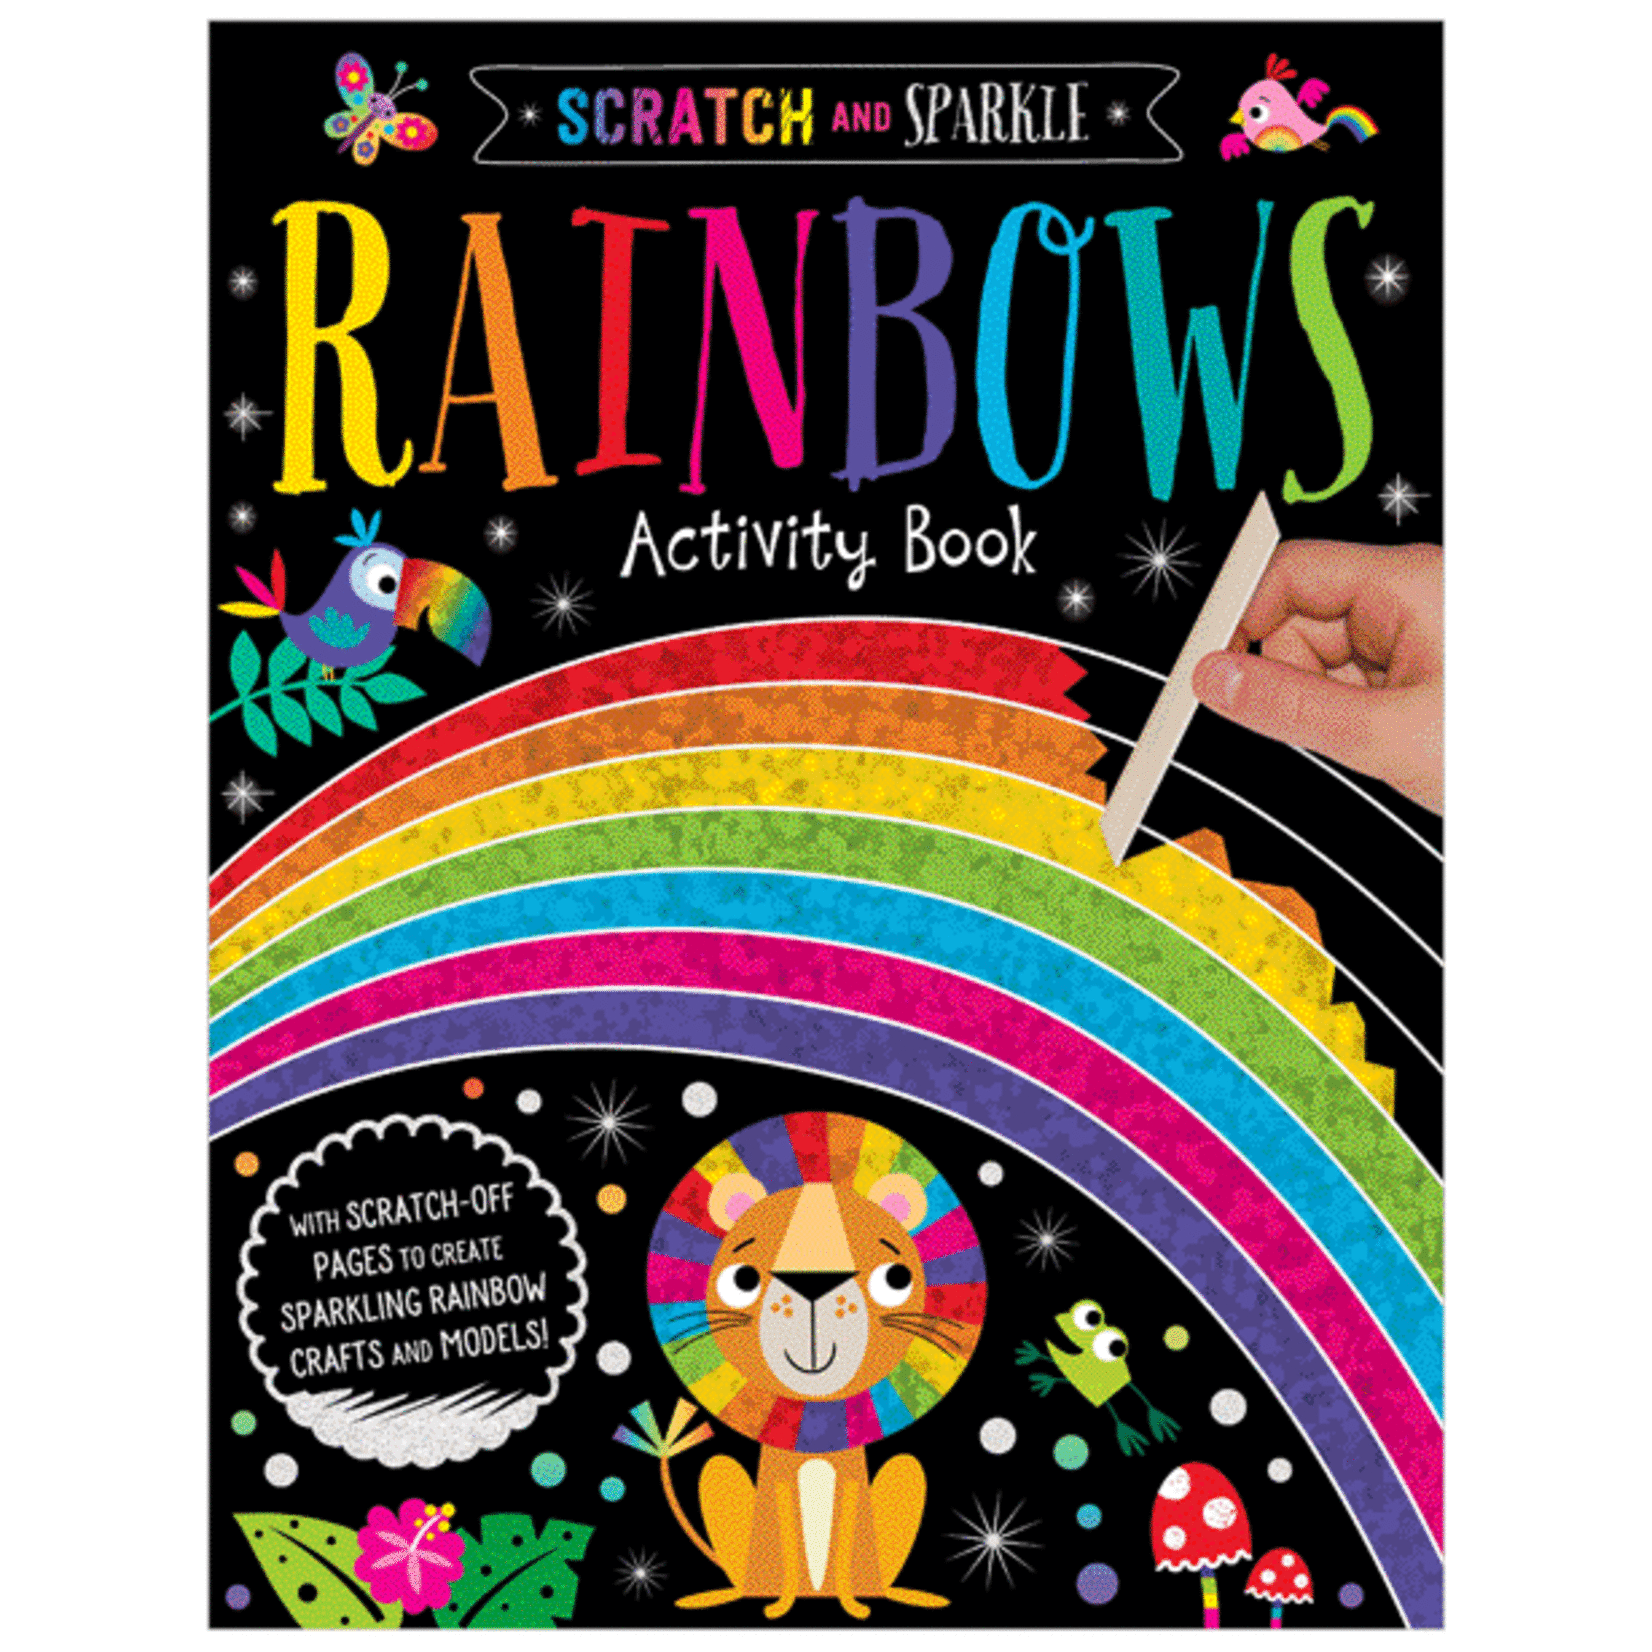 Make Believe Ideas Make Believe Ideas - Scratch and Sparkle Rainbow  Activity Books